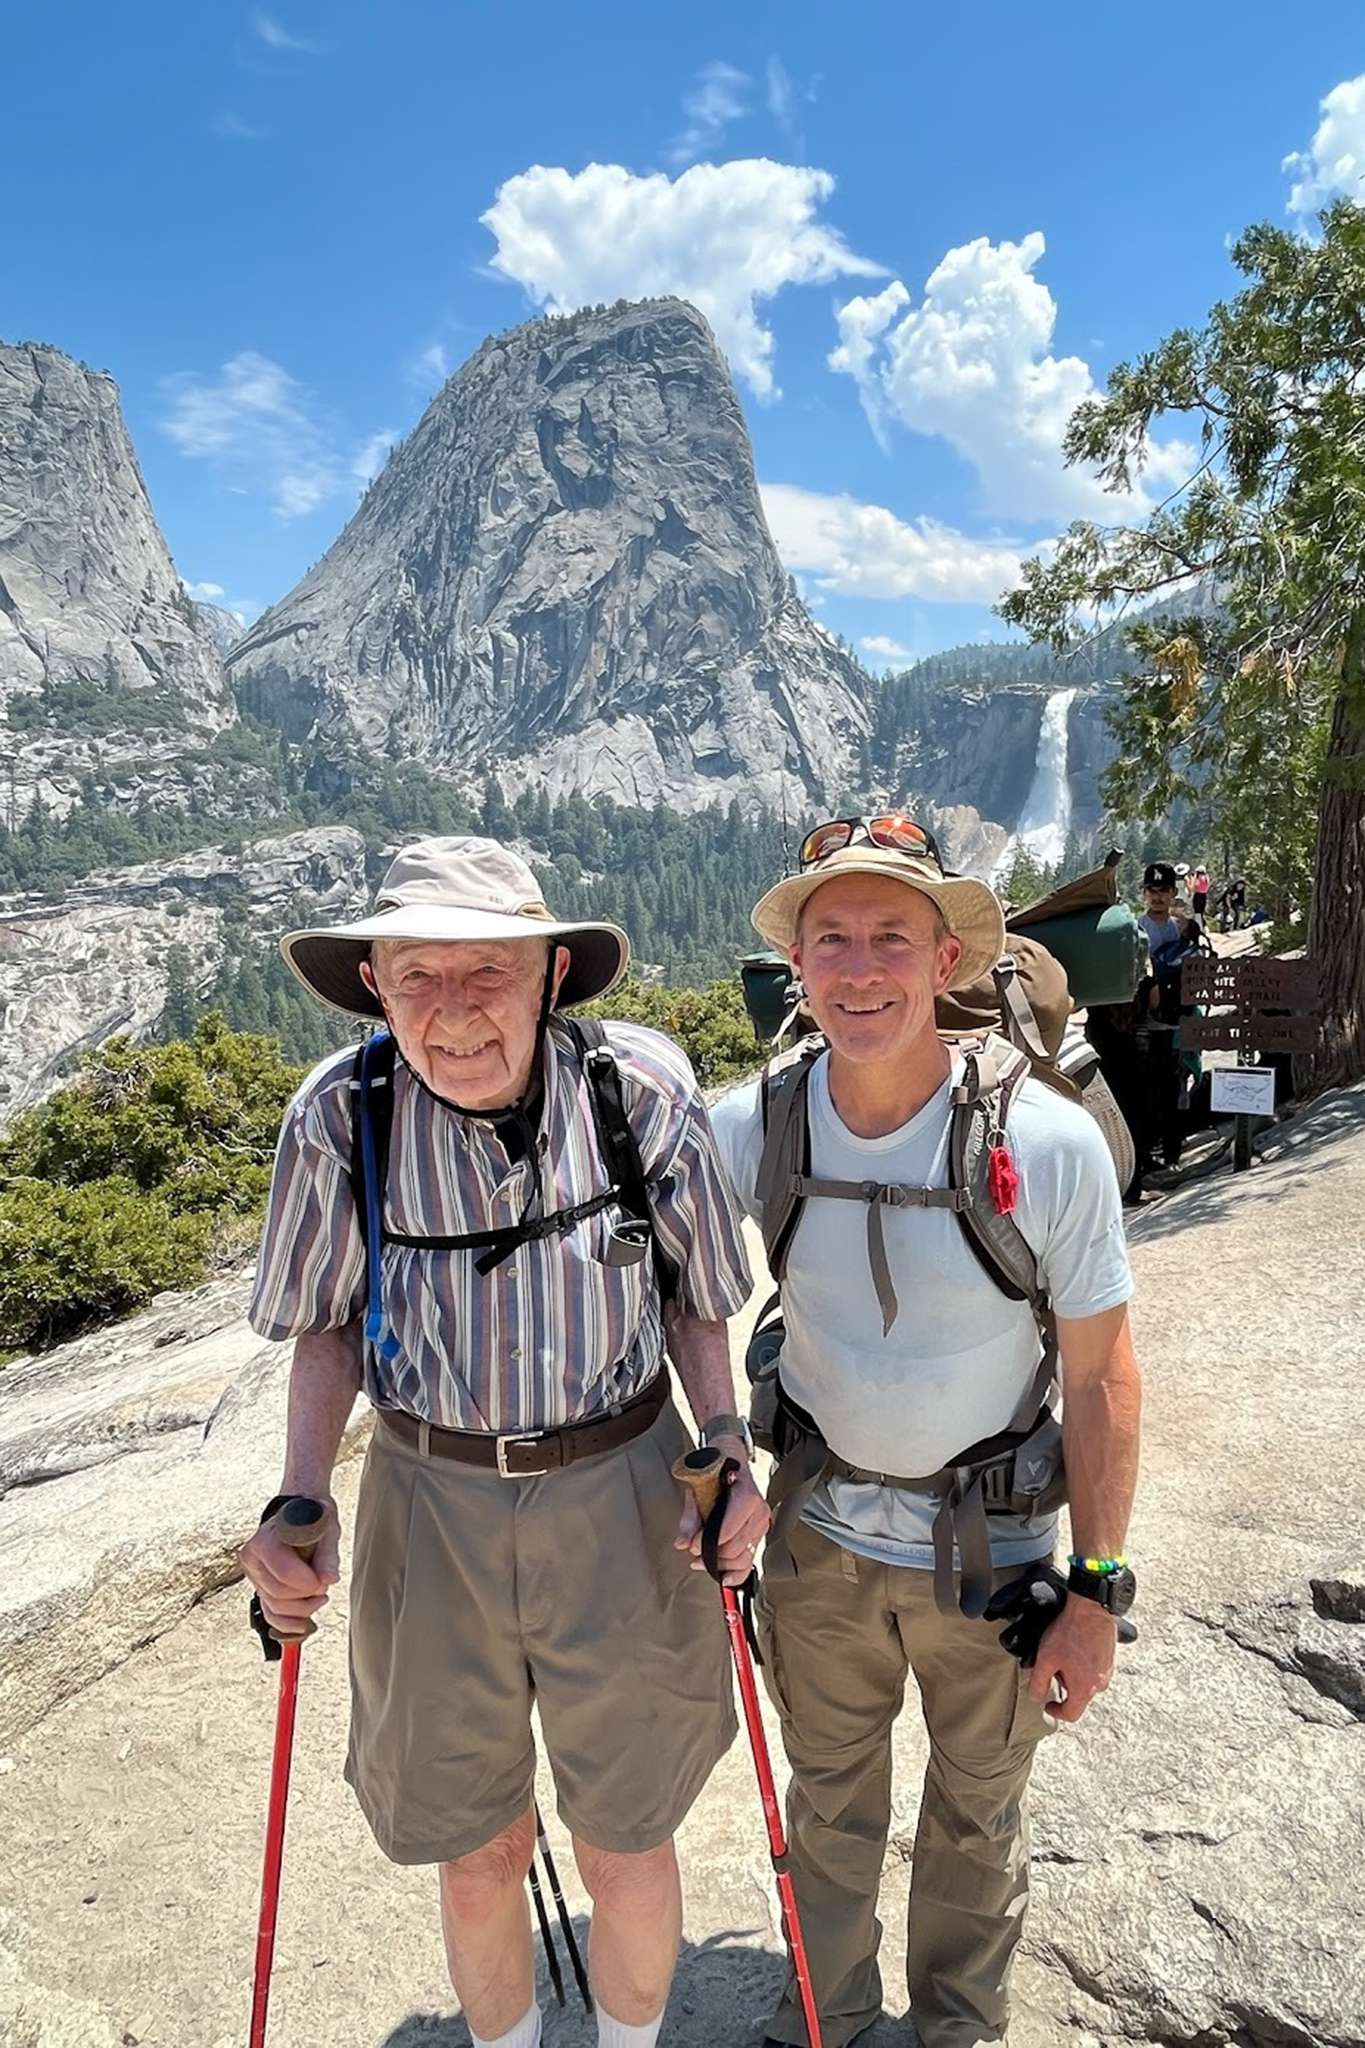 93-year-old summits Yosemite's Half Dome: 'It felt pretty good